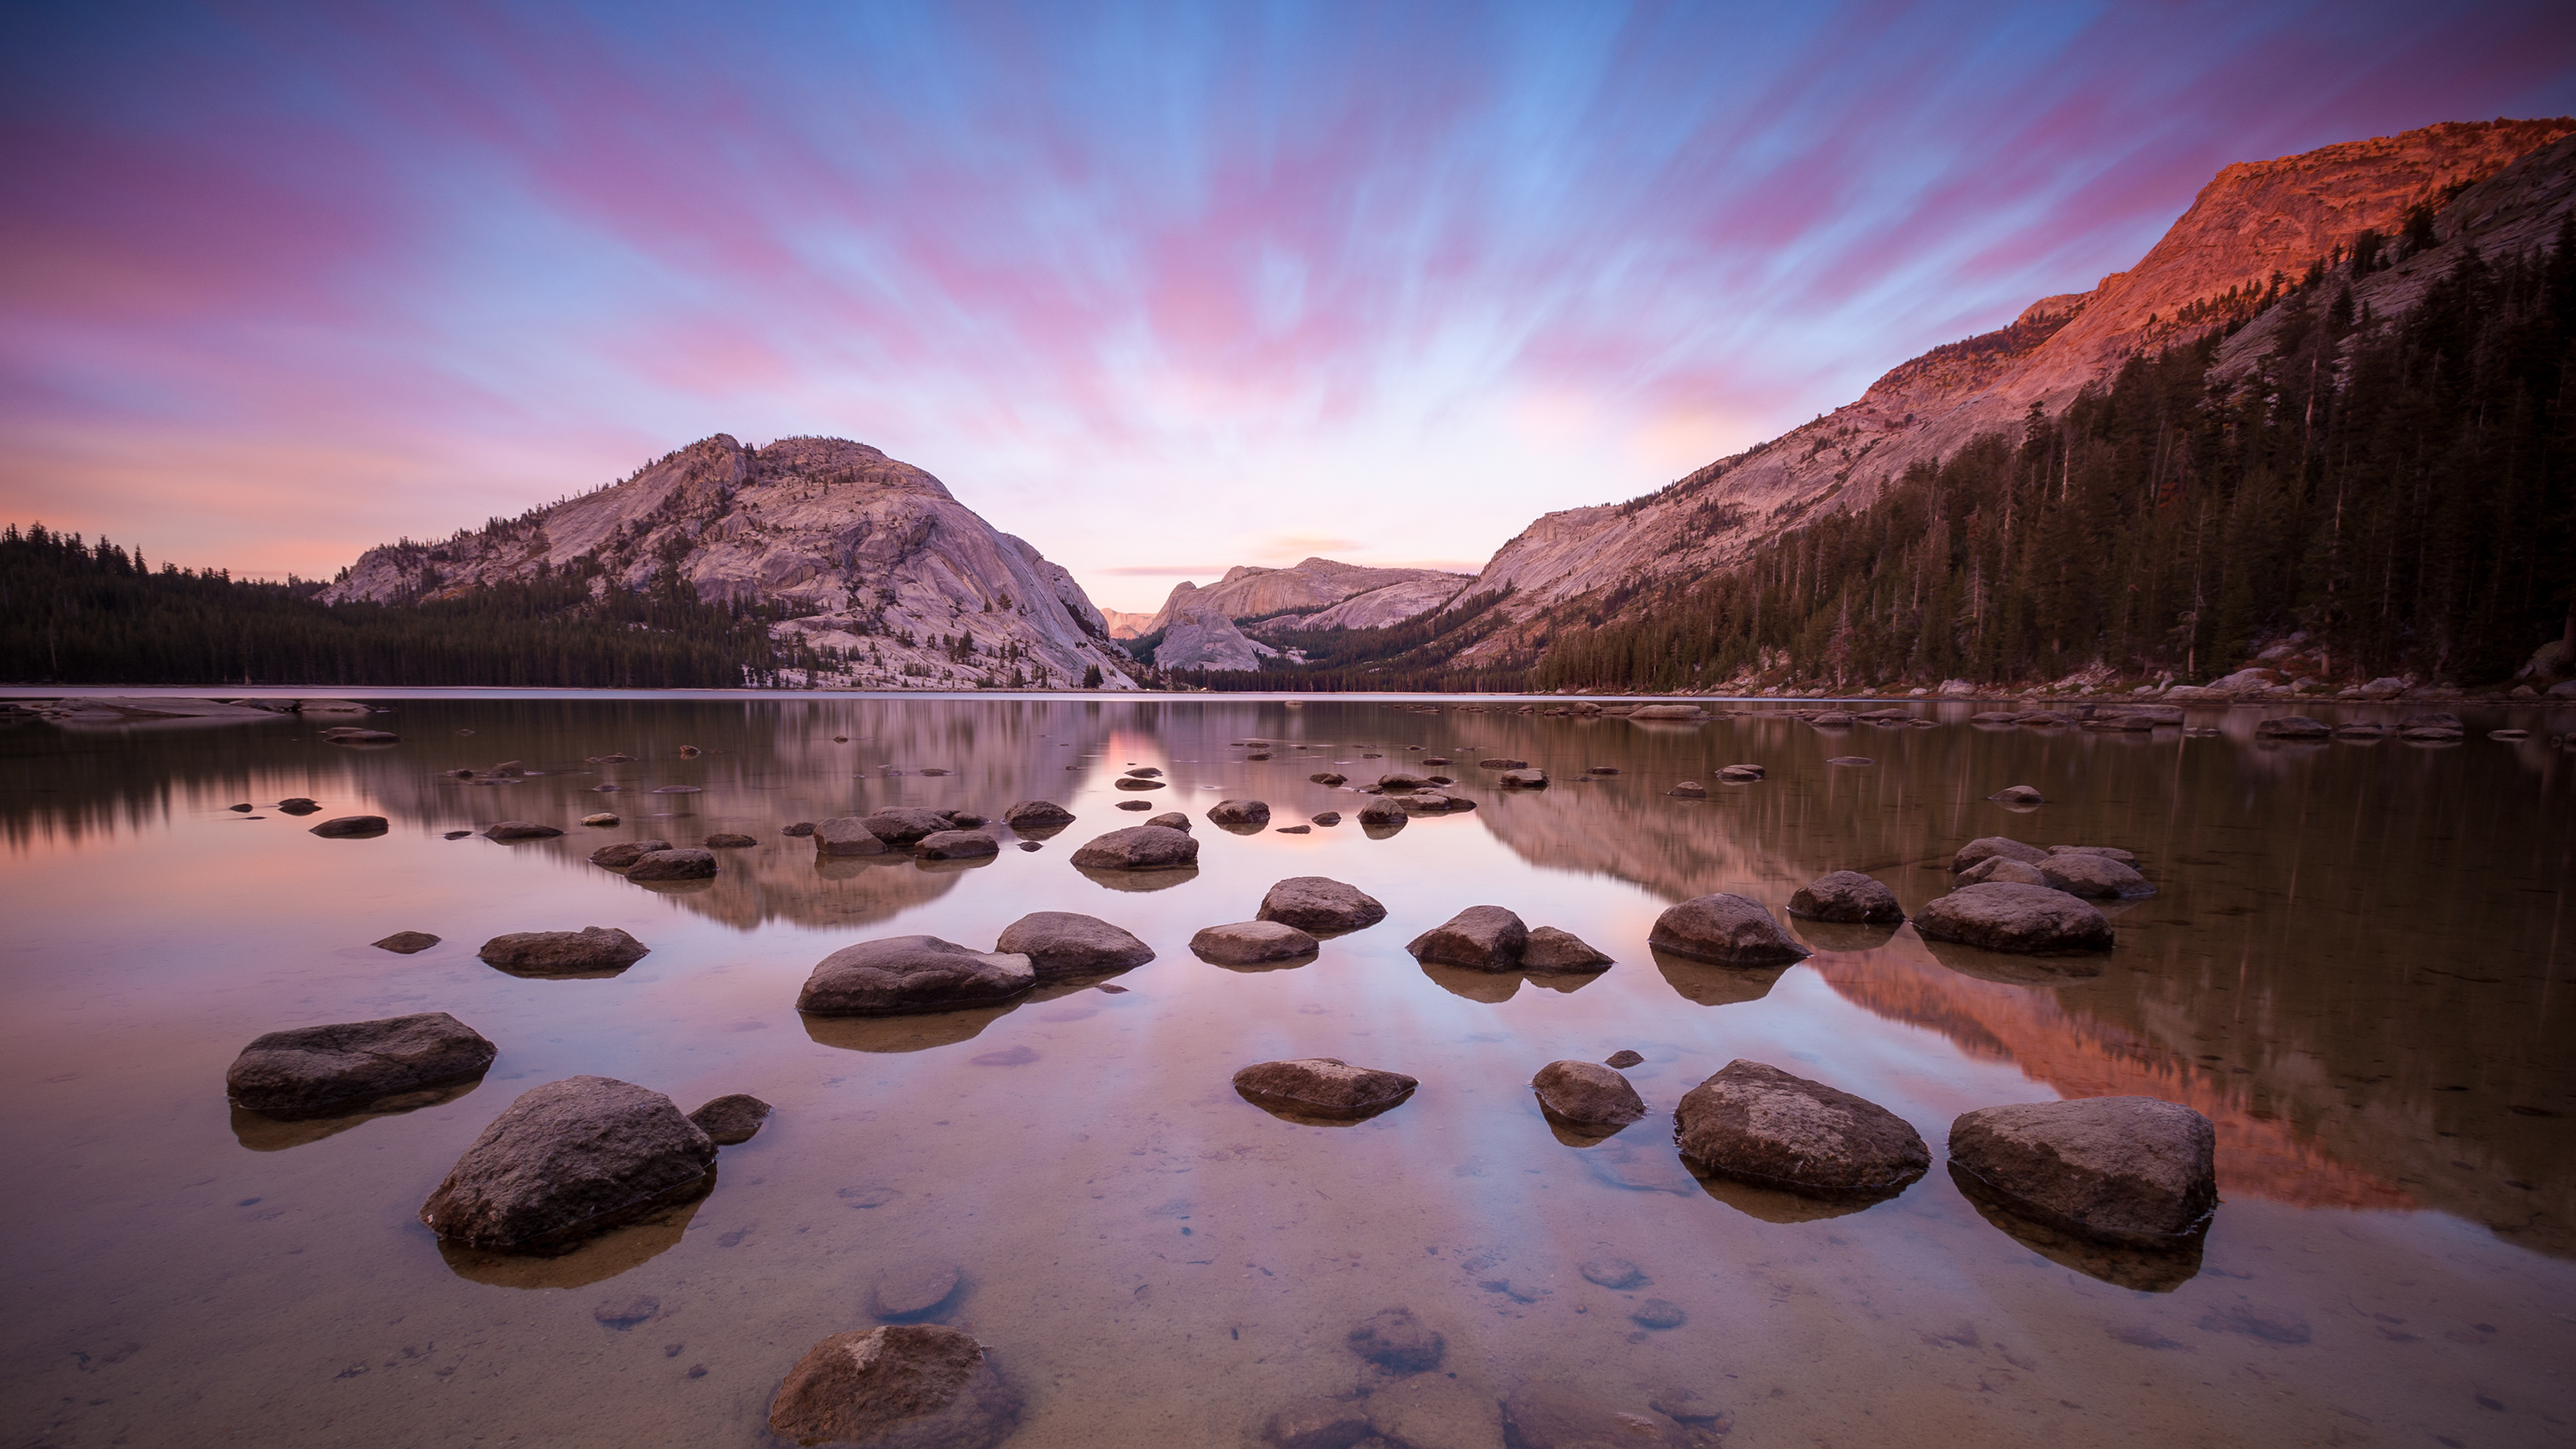 General 3840x2160 Yosemite National Park USA Yosemite Valley California landscape river water mountains reflection macOS